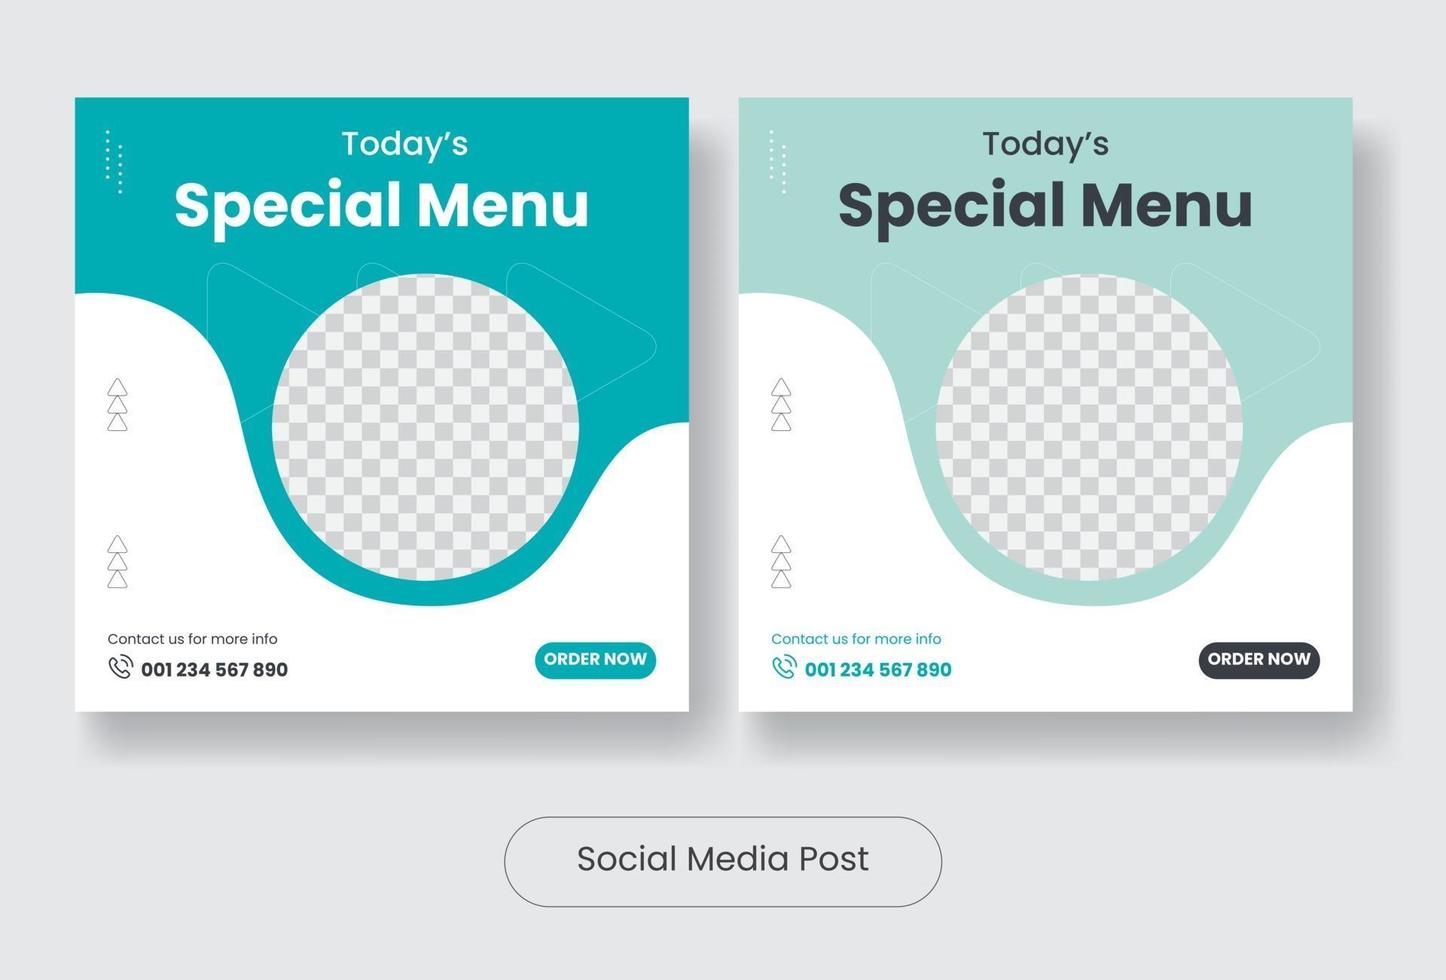 menu de comida especial mídia social postar modelo de banner vetor